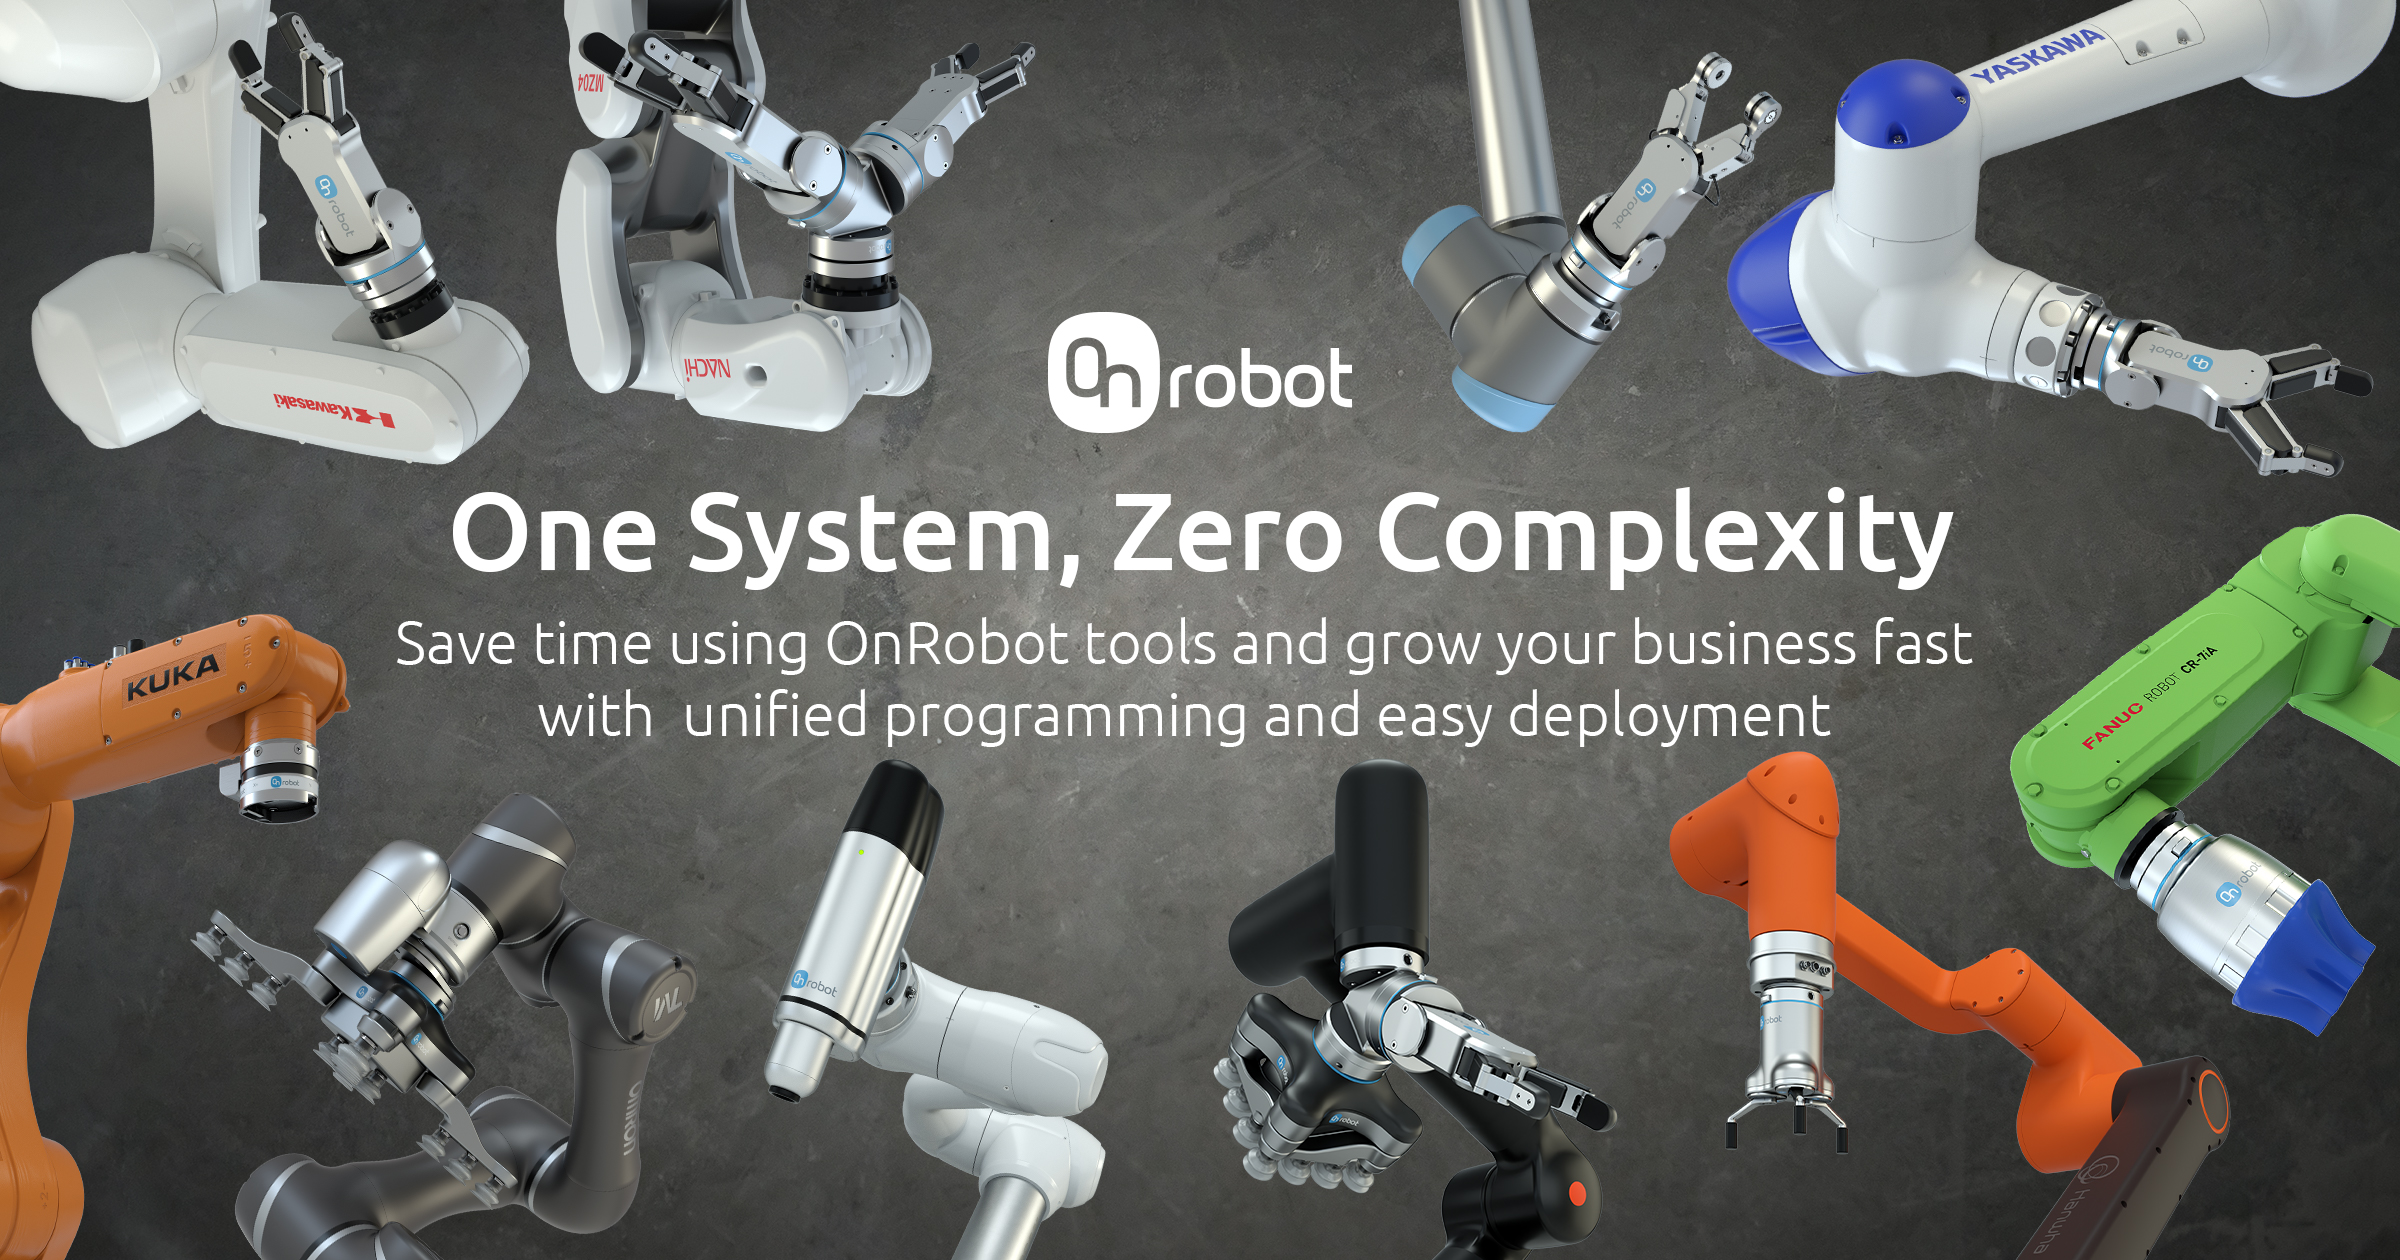 OnRobot Accessories for Collaborative Robots